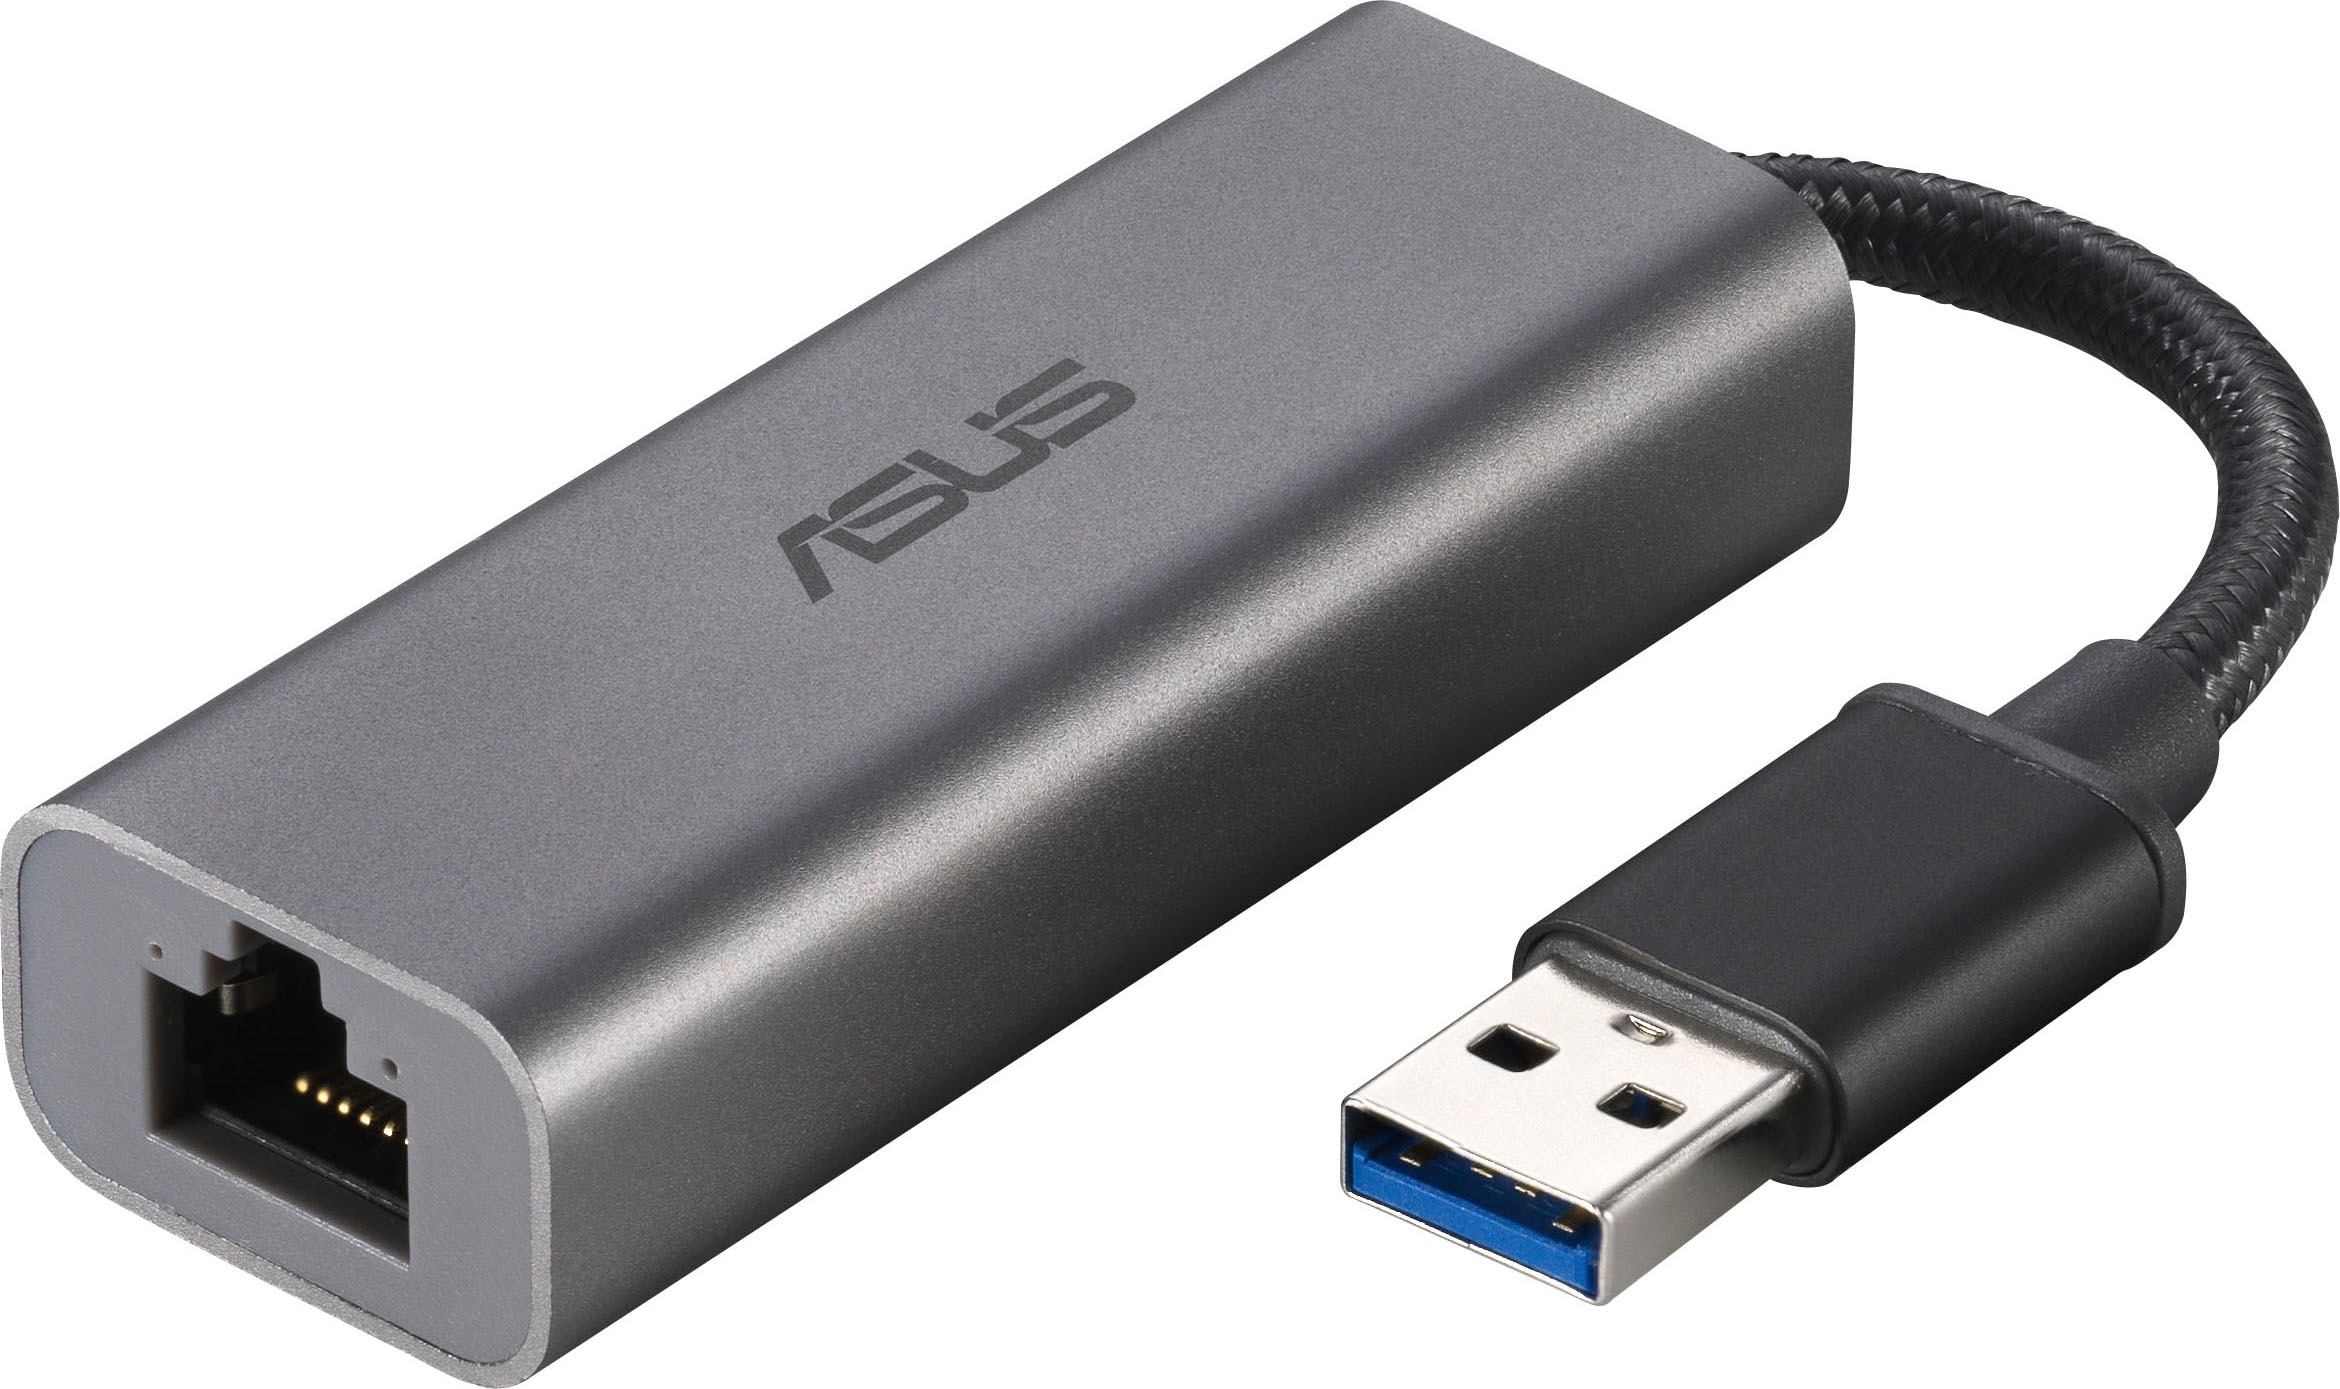 Asus Adapter »USB-C2500«, USB zu RJ-45 (Ethernet)